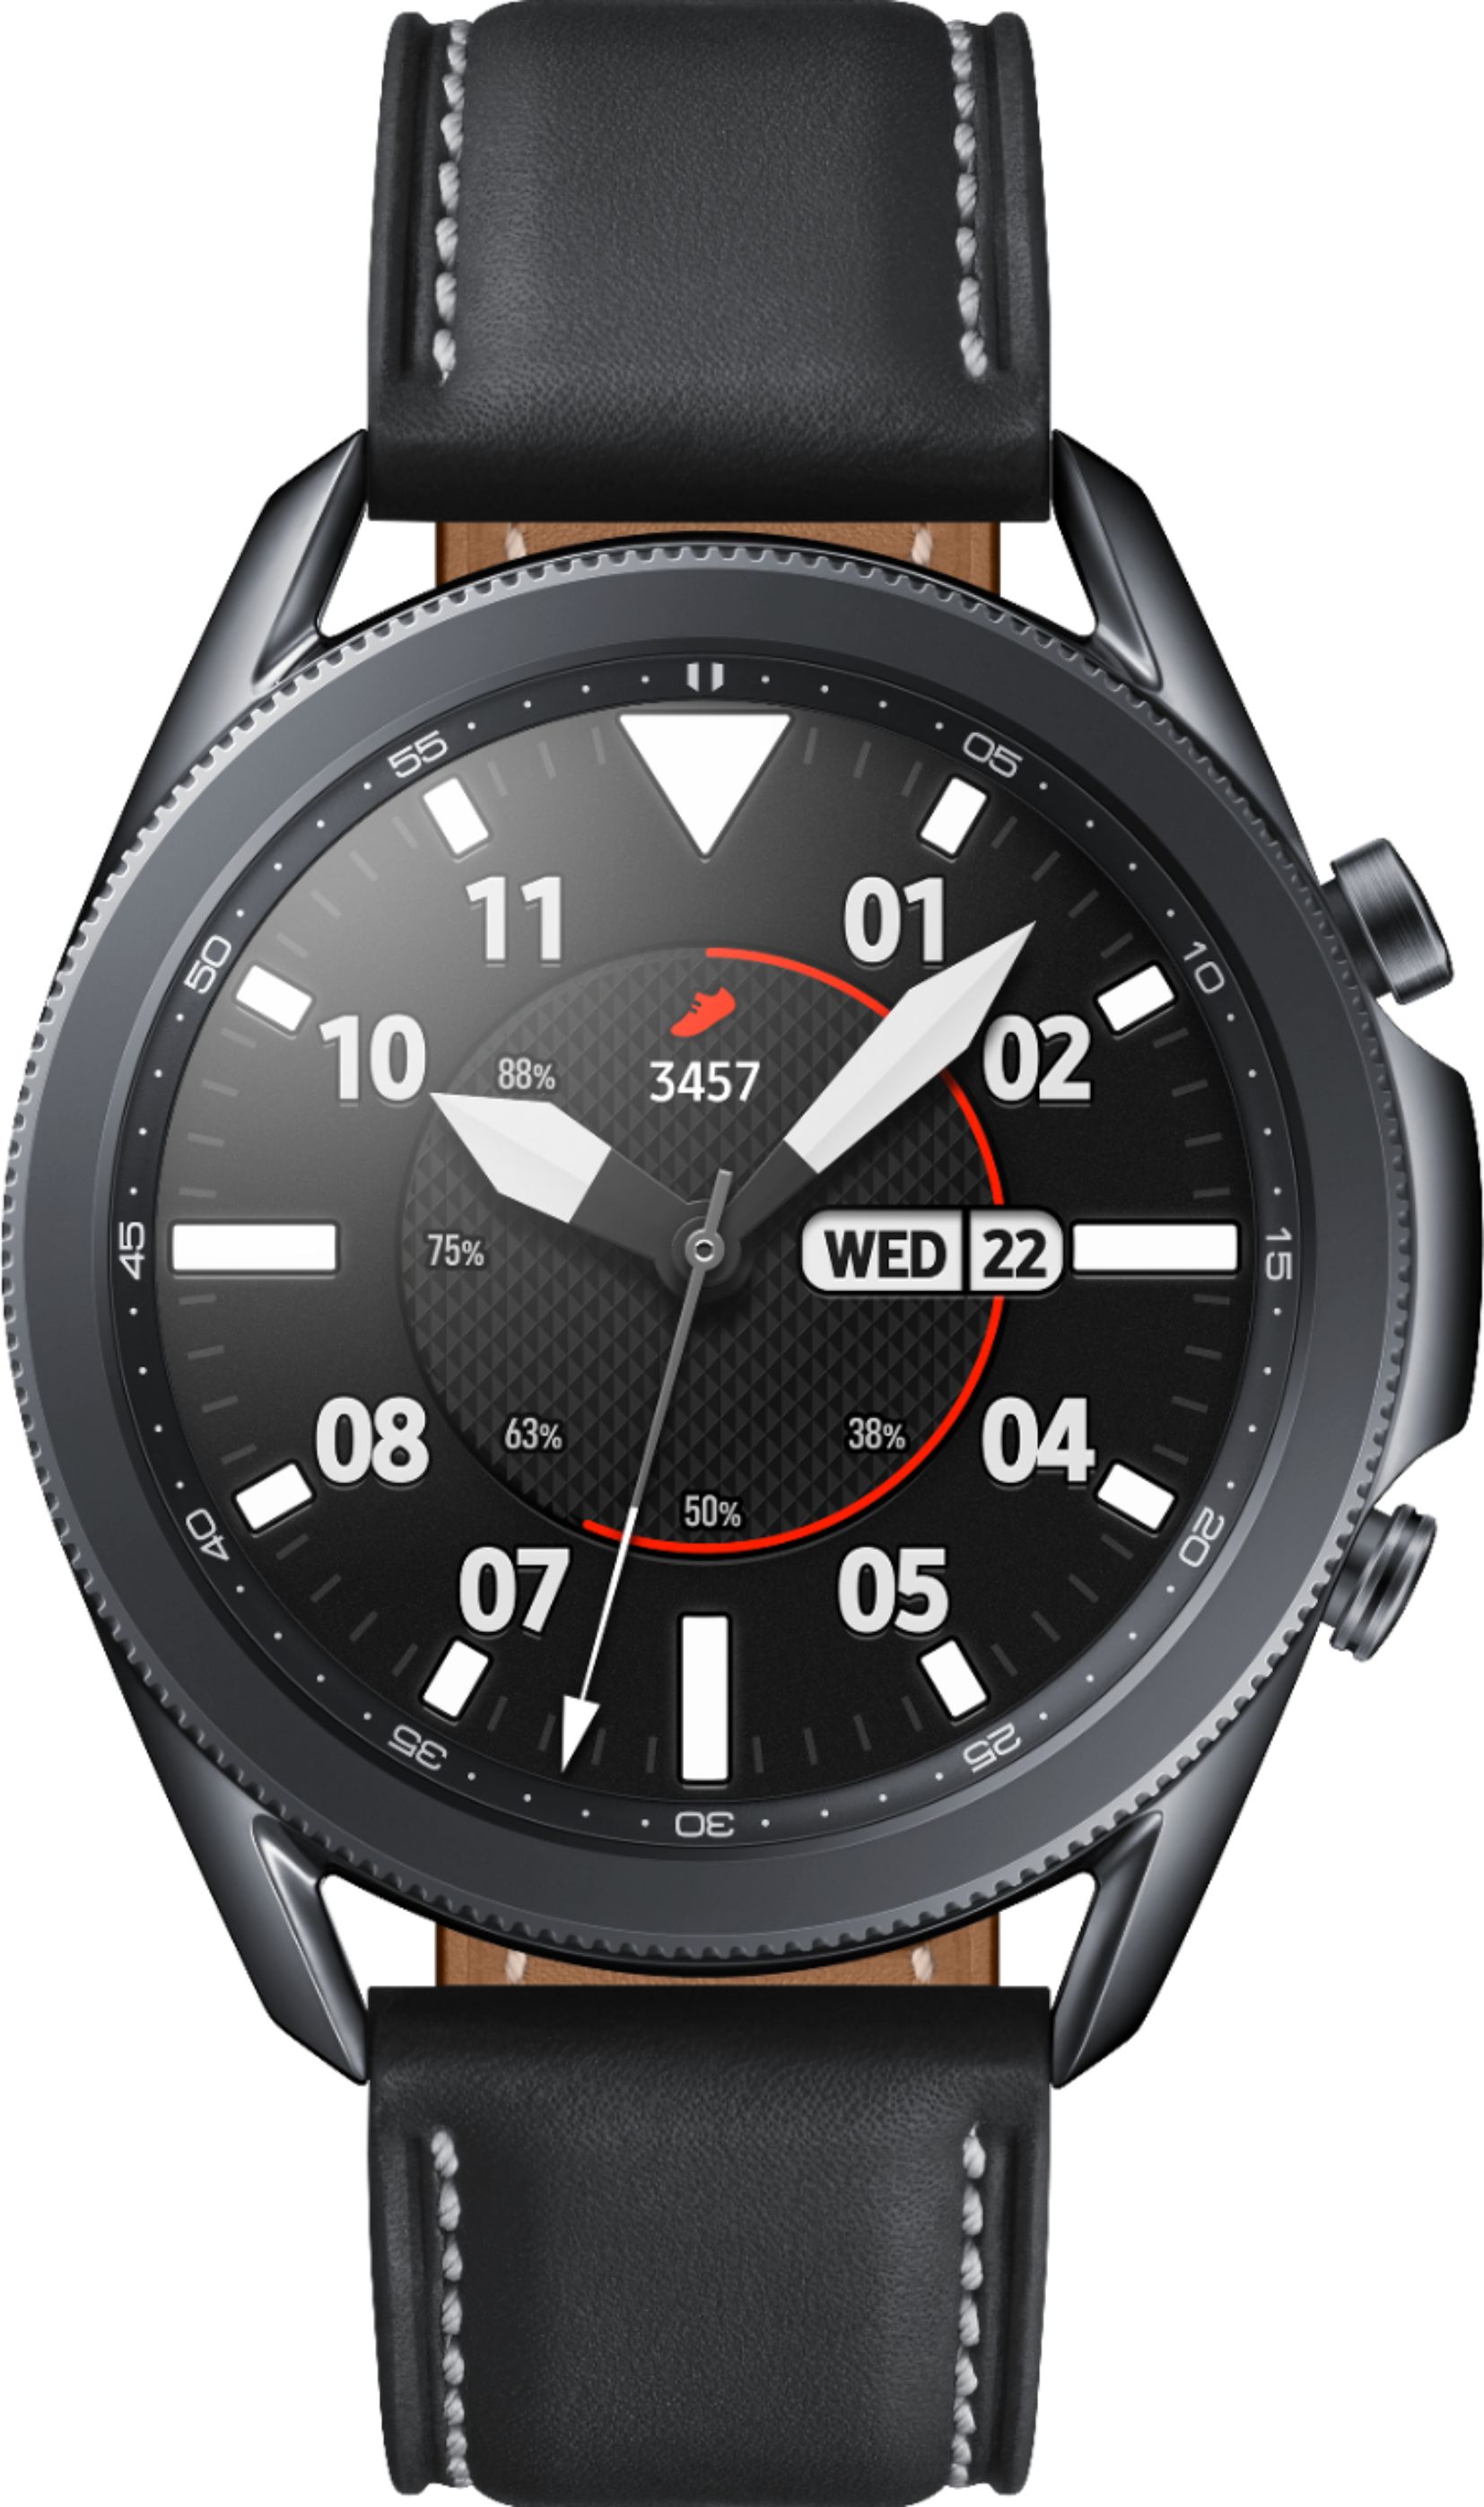 Samsung Geek Squad Certified Refurbished Galaxy Watch3 Smartwatch ...